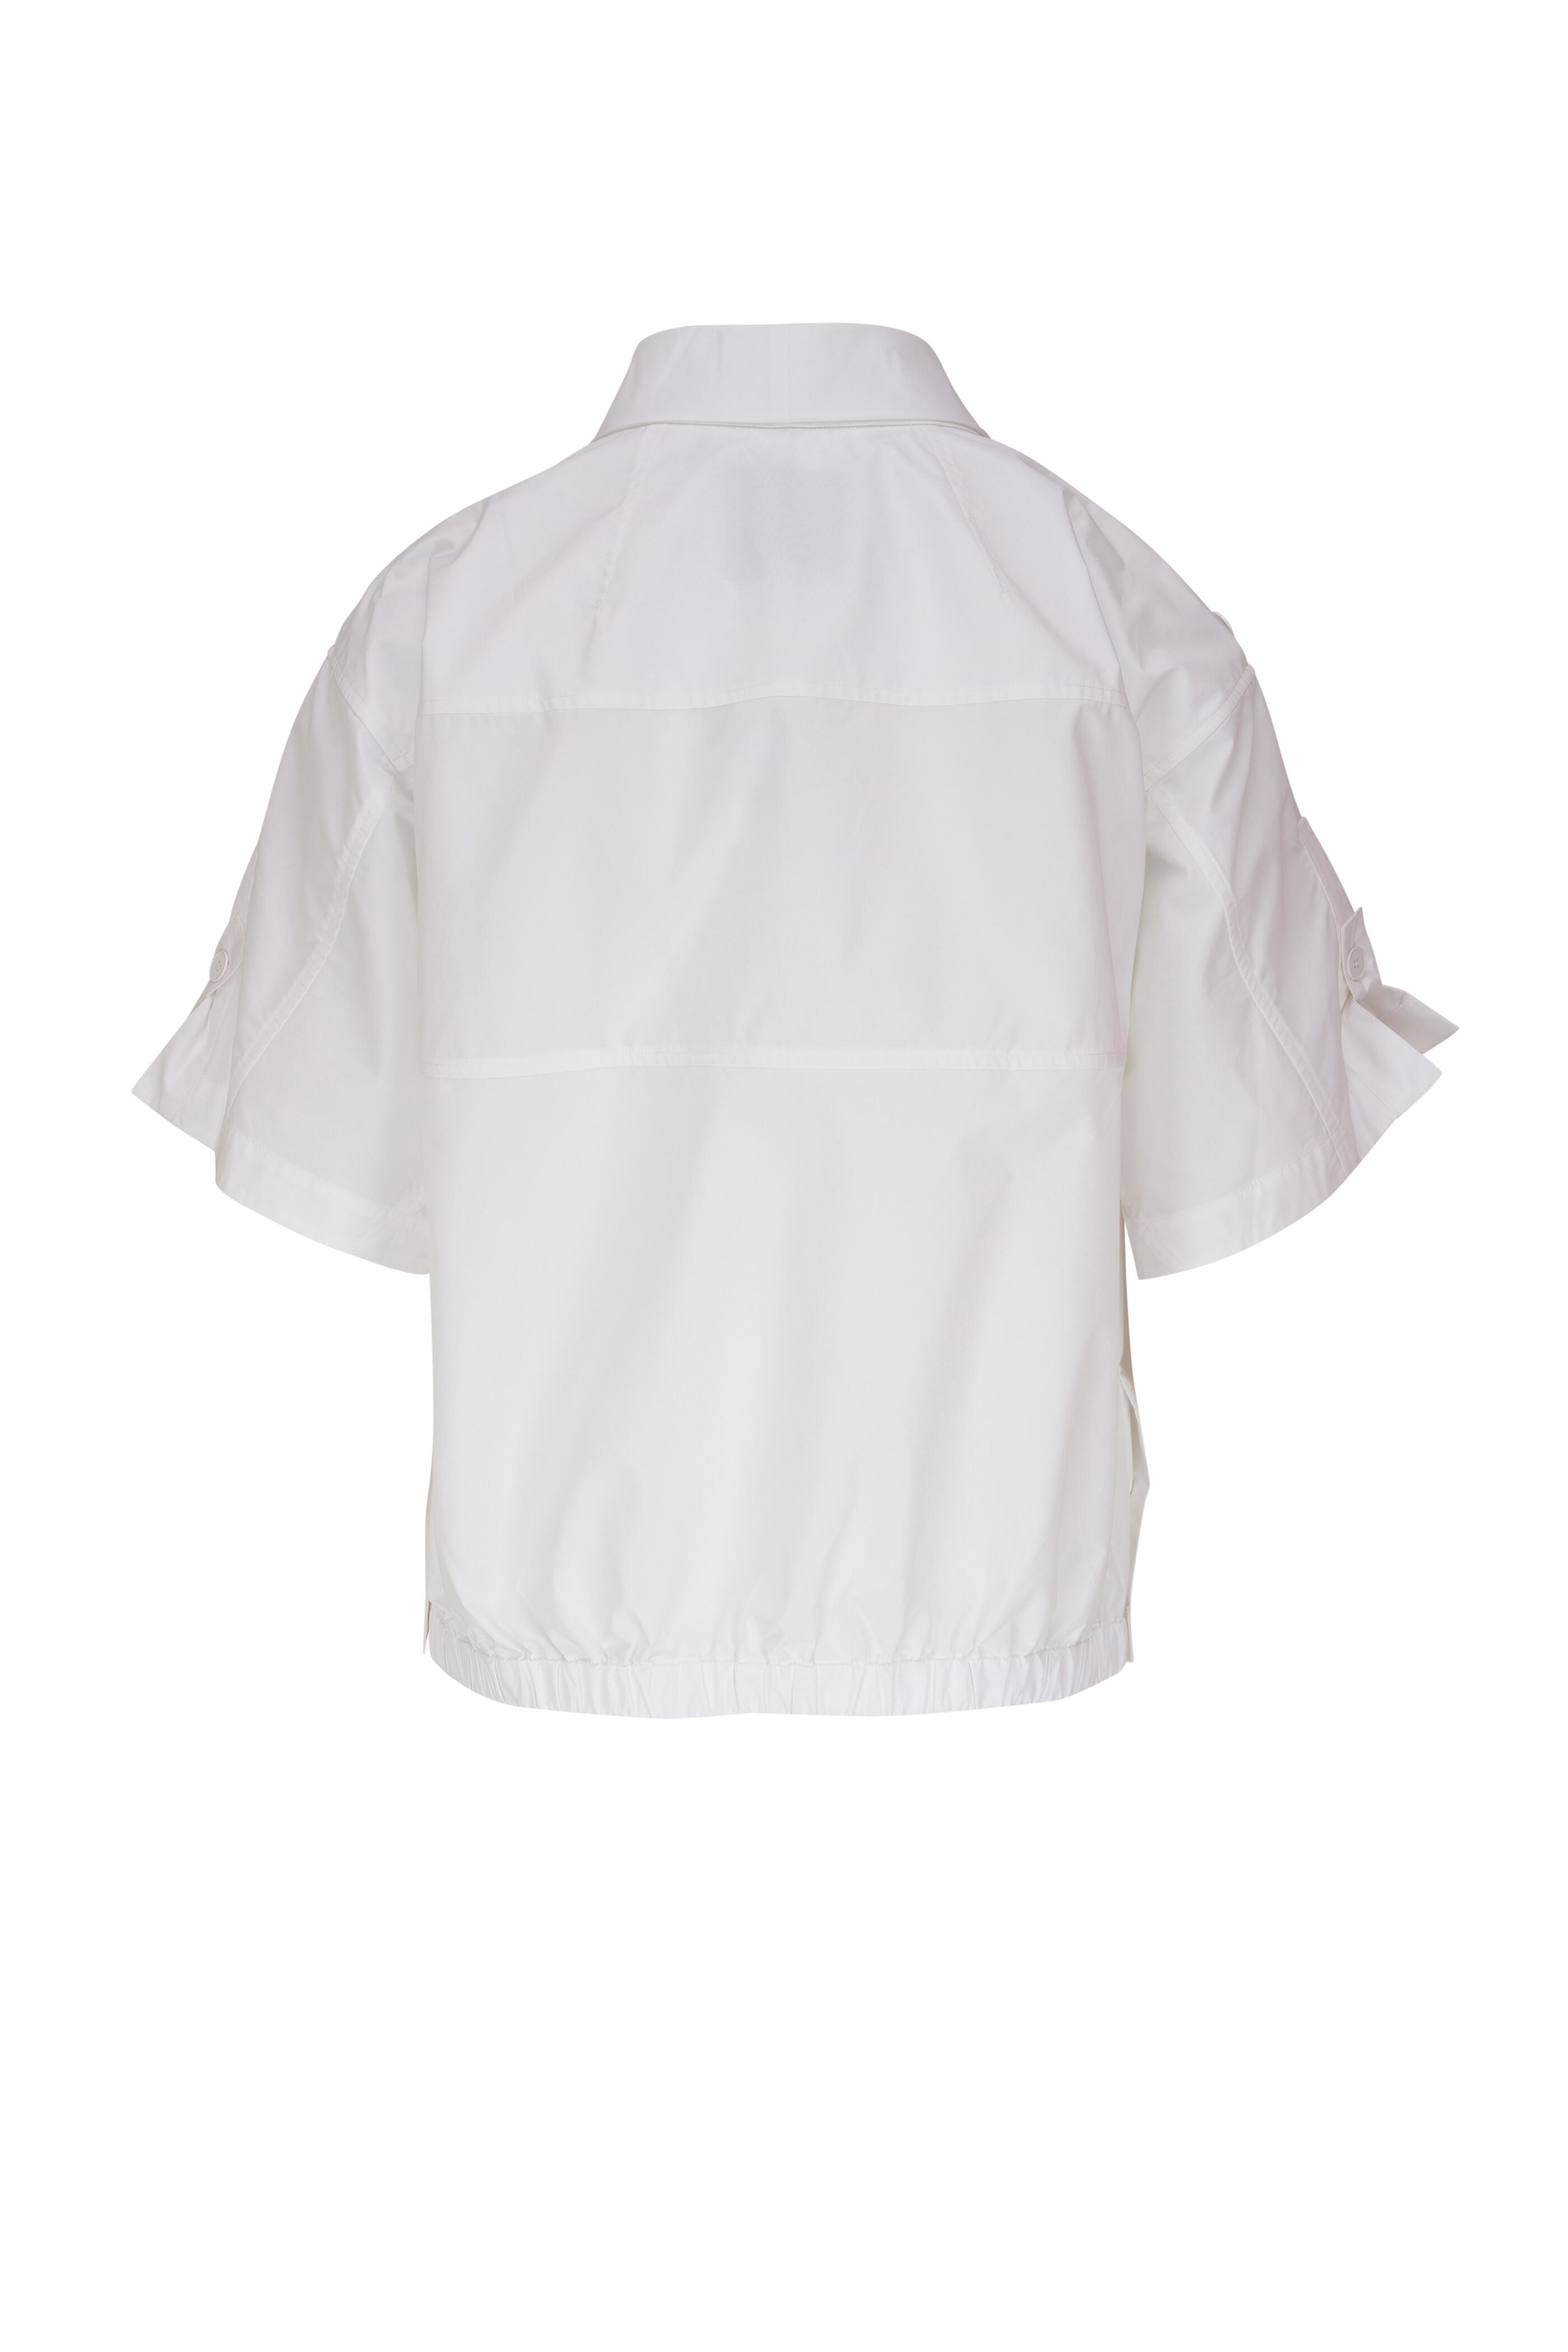 3.1 Phillip Lim - White Stretch Cotton Short Sleeve Top